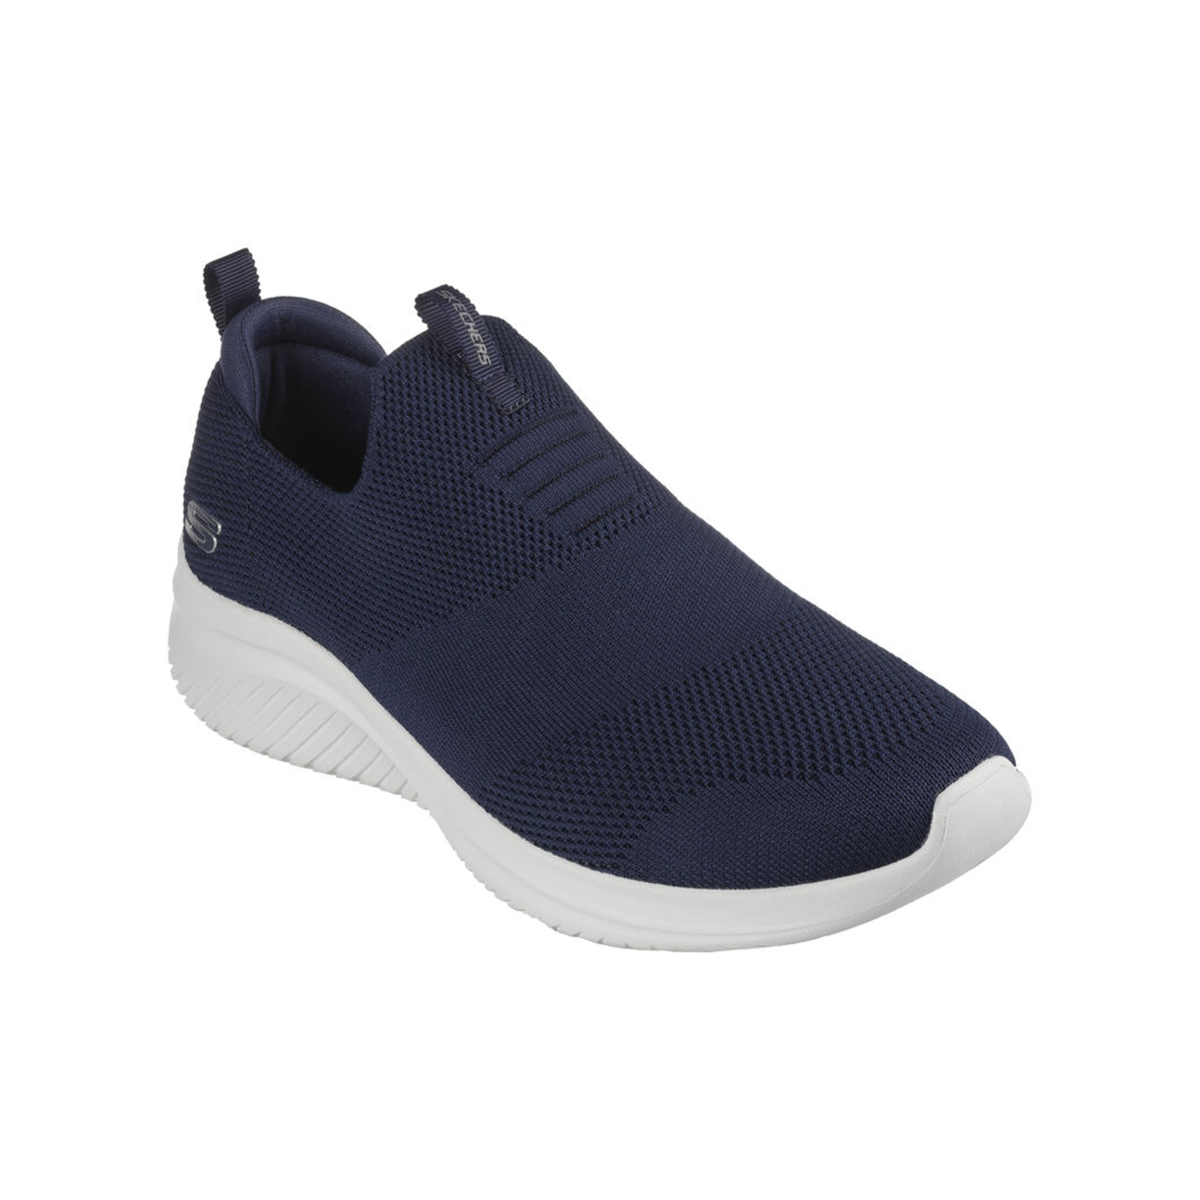 Skechers Ultra Flex 3.0 Lifestyle Shoes For Men, Navy